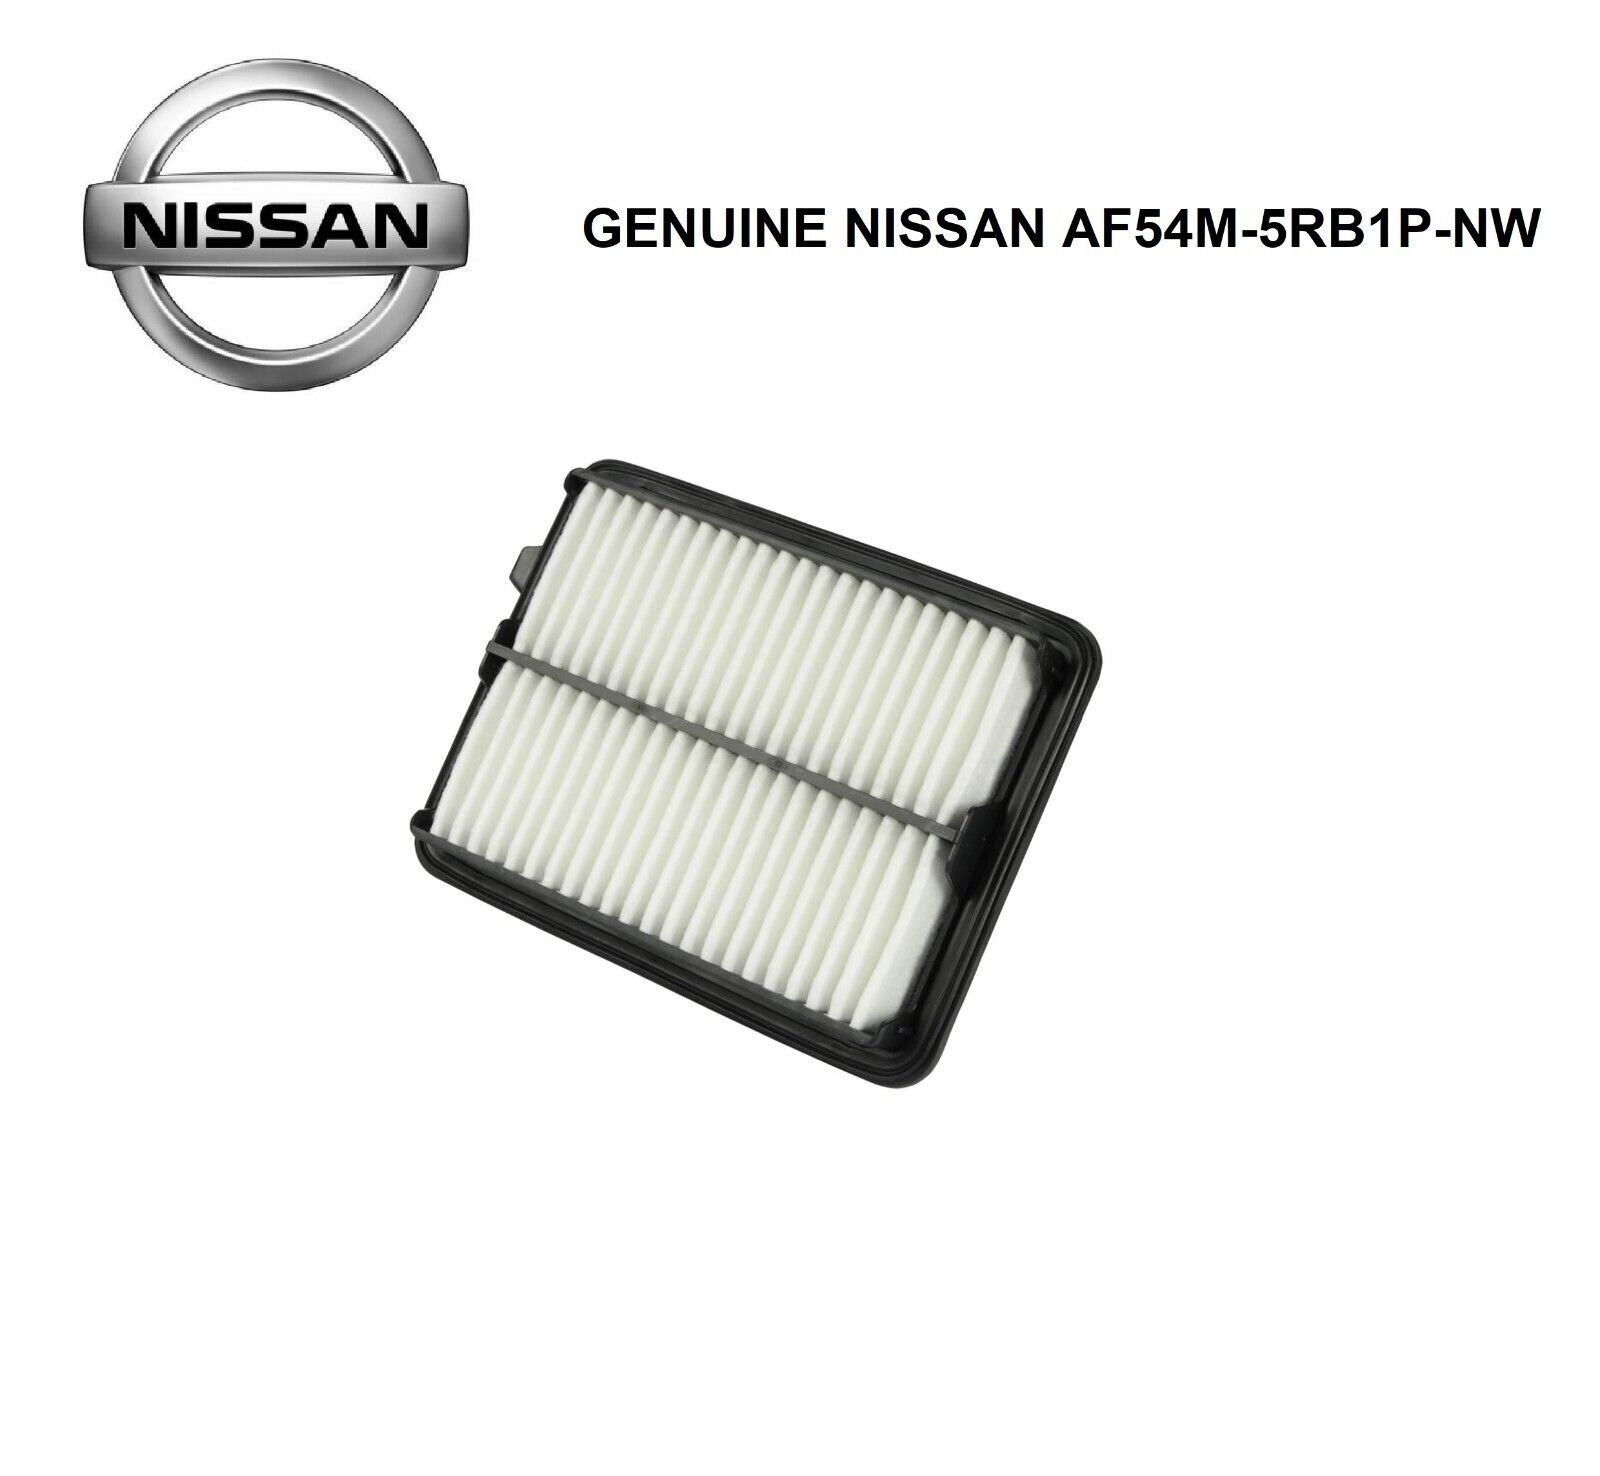 GENUINE NISSAN OEM Engine Air Filter for  NEW Nissan VERSA KICKS AF54M-5RB1P-NW